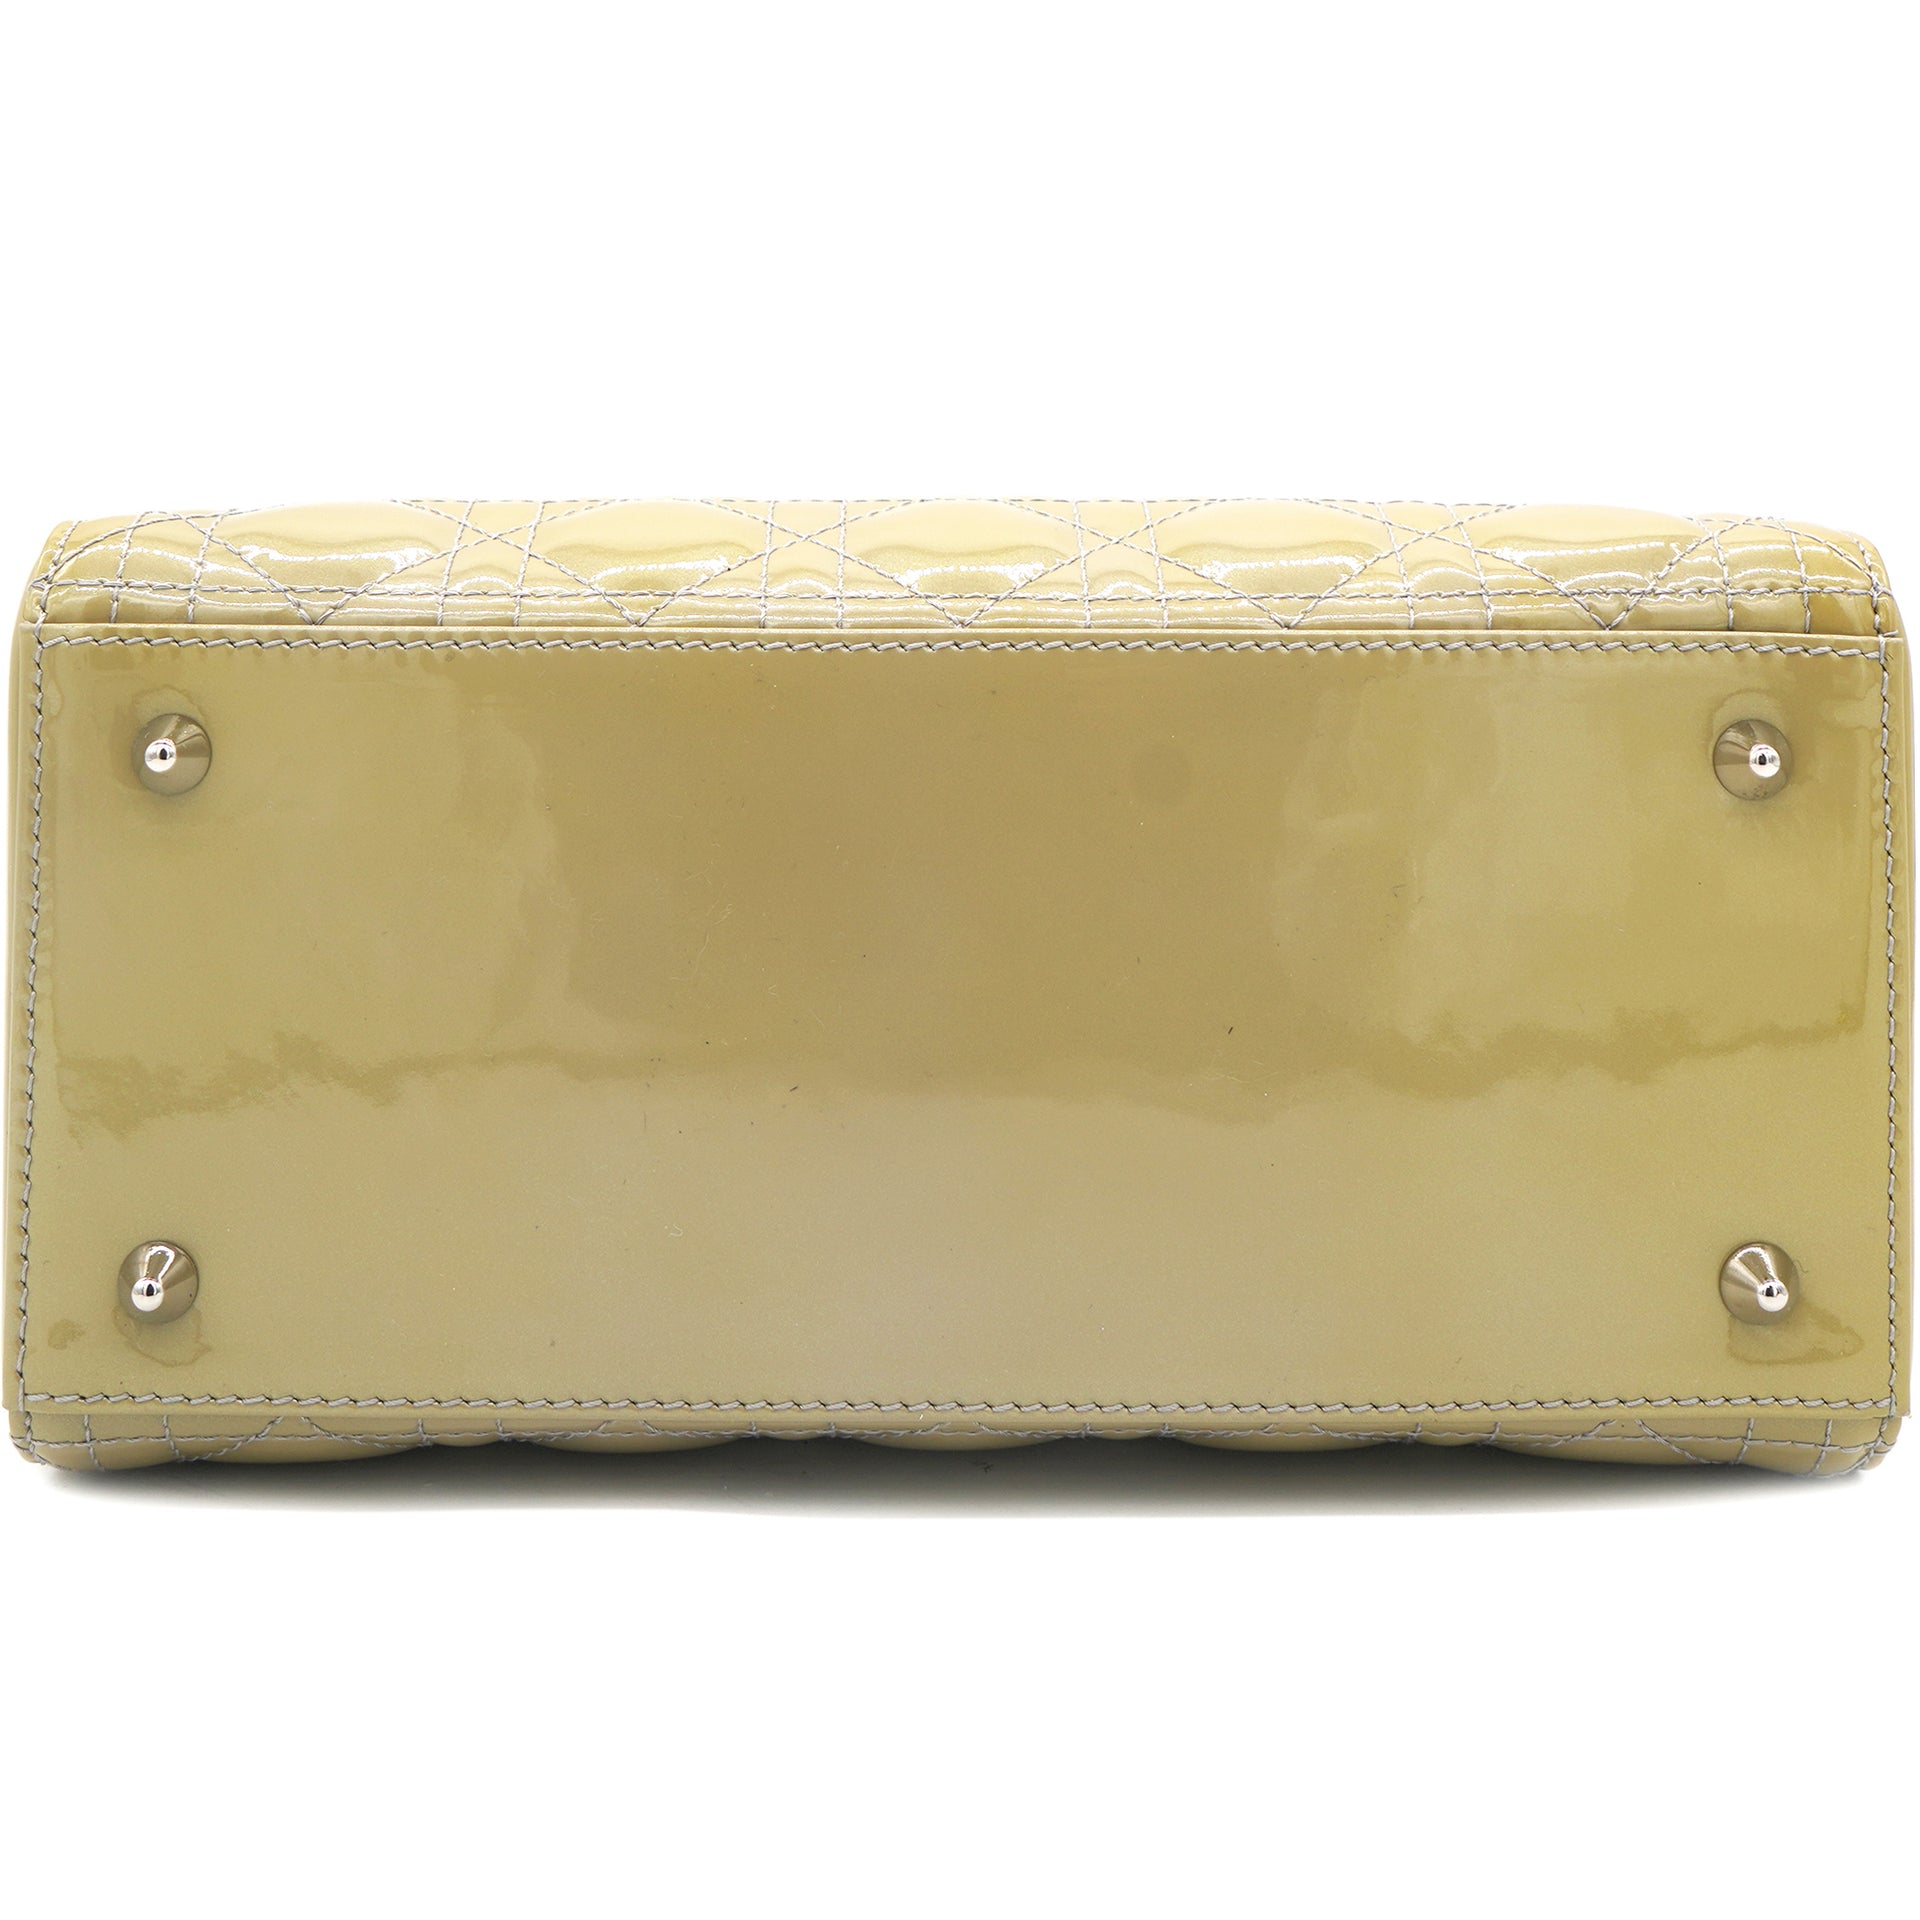 Lady Dior Medium Yellow Patent Bag